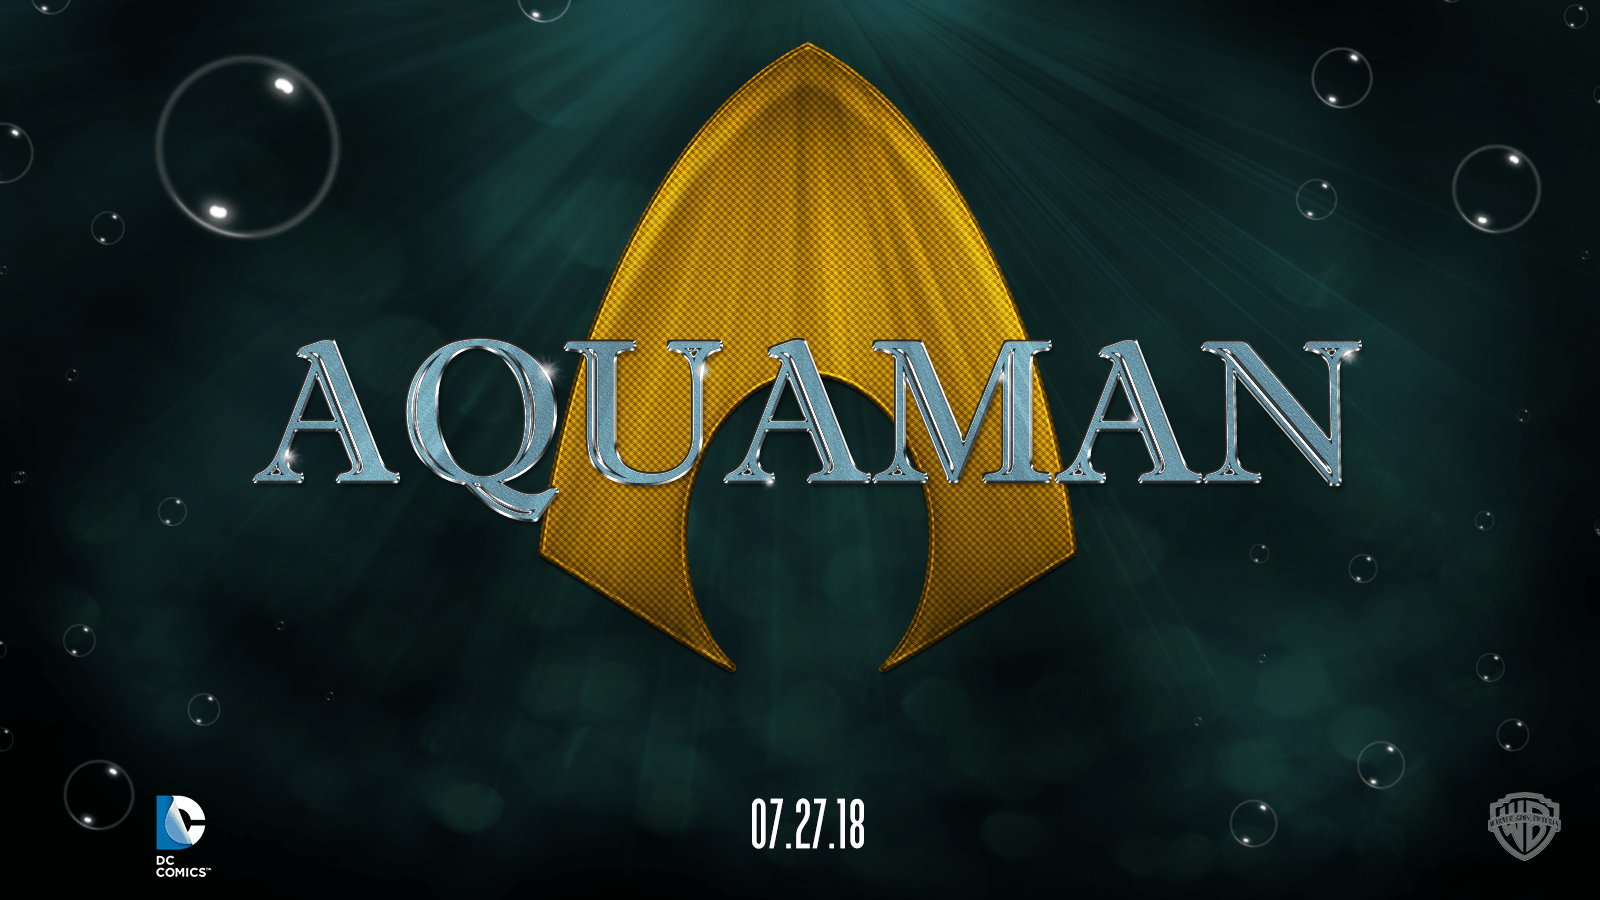 Aquamanwallpaper.net